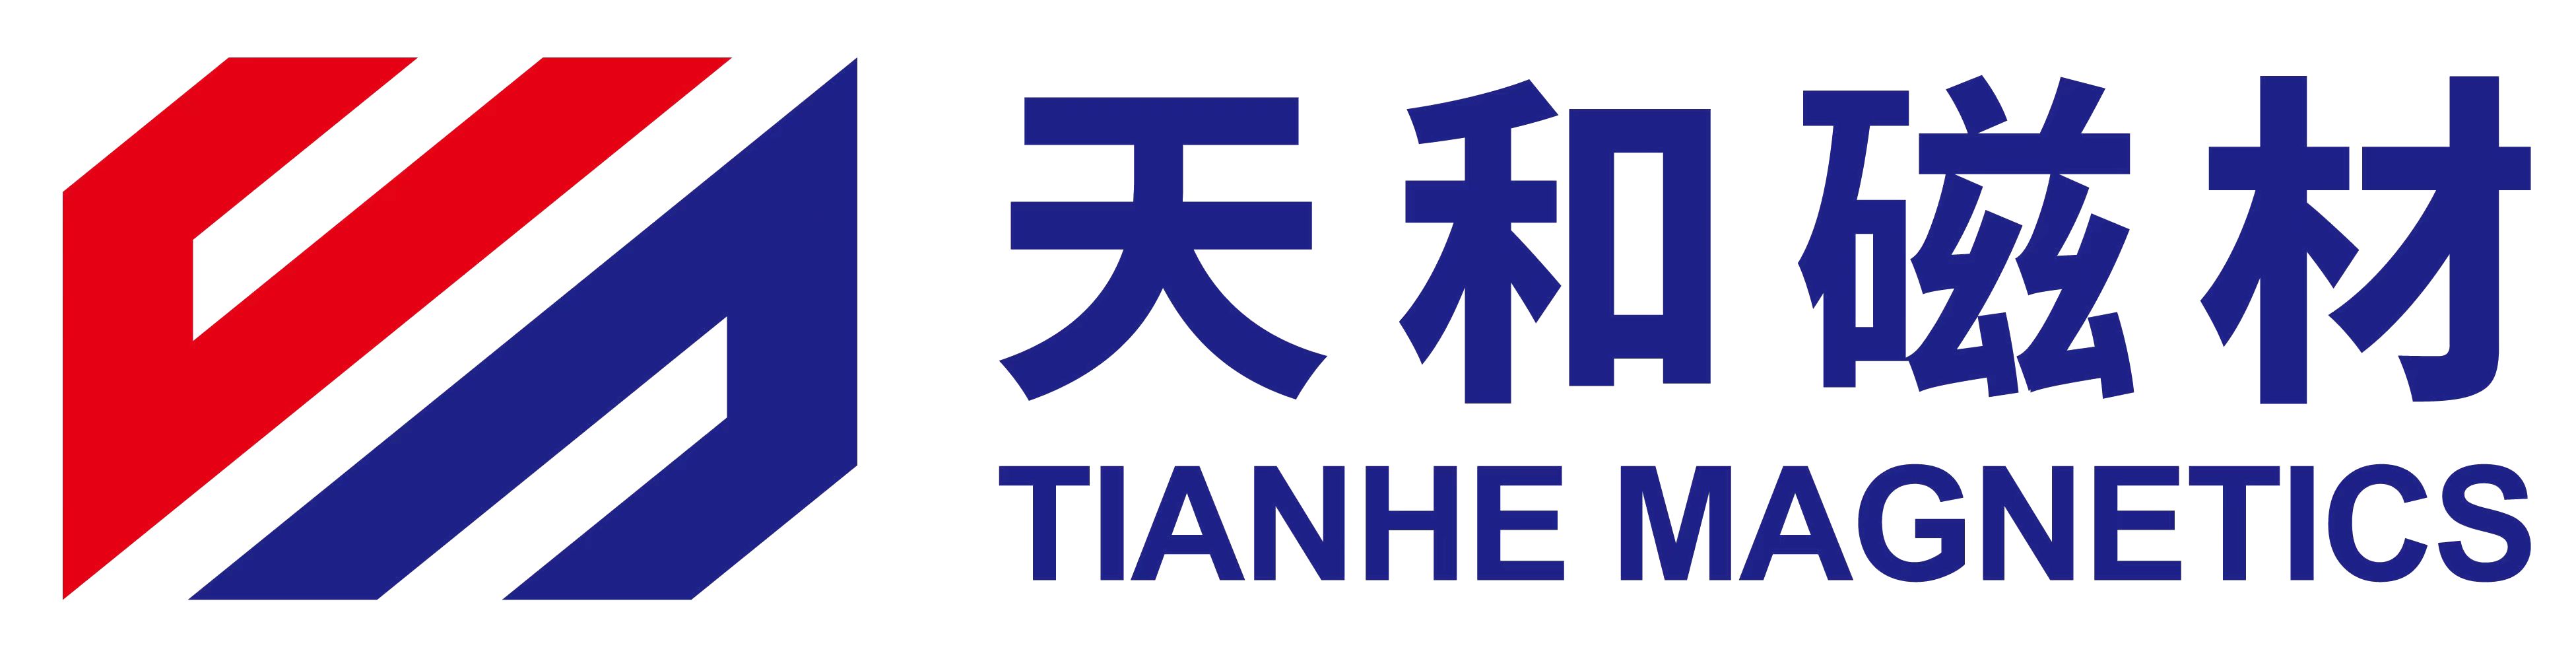 Baotou Tianhe Magnetics Technology Co., Ltd.